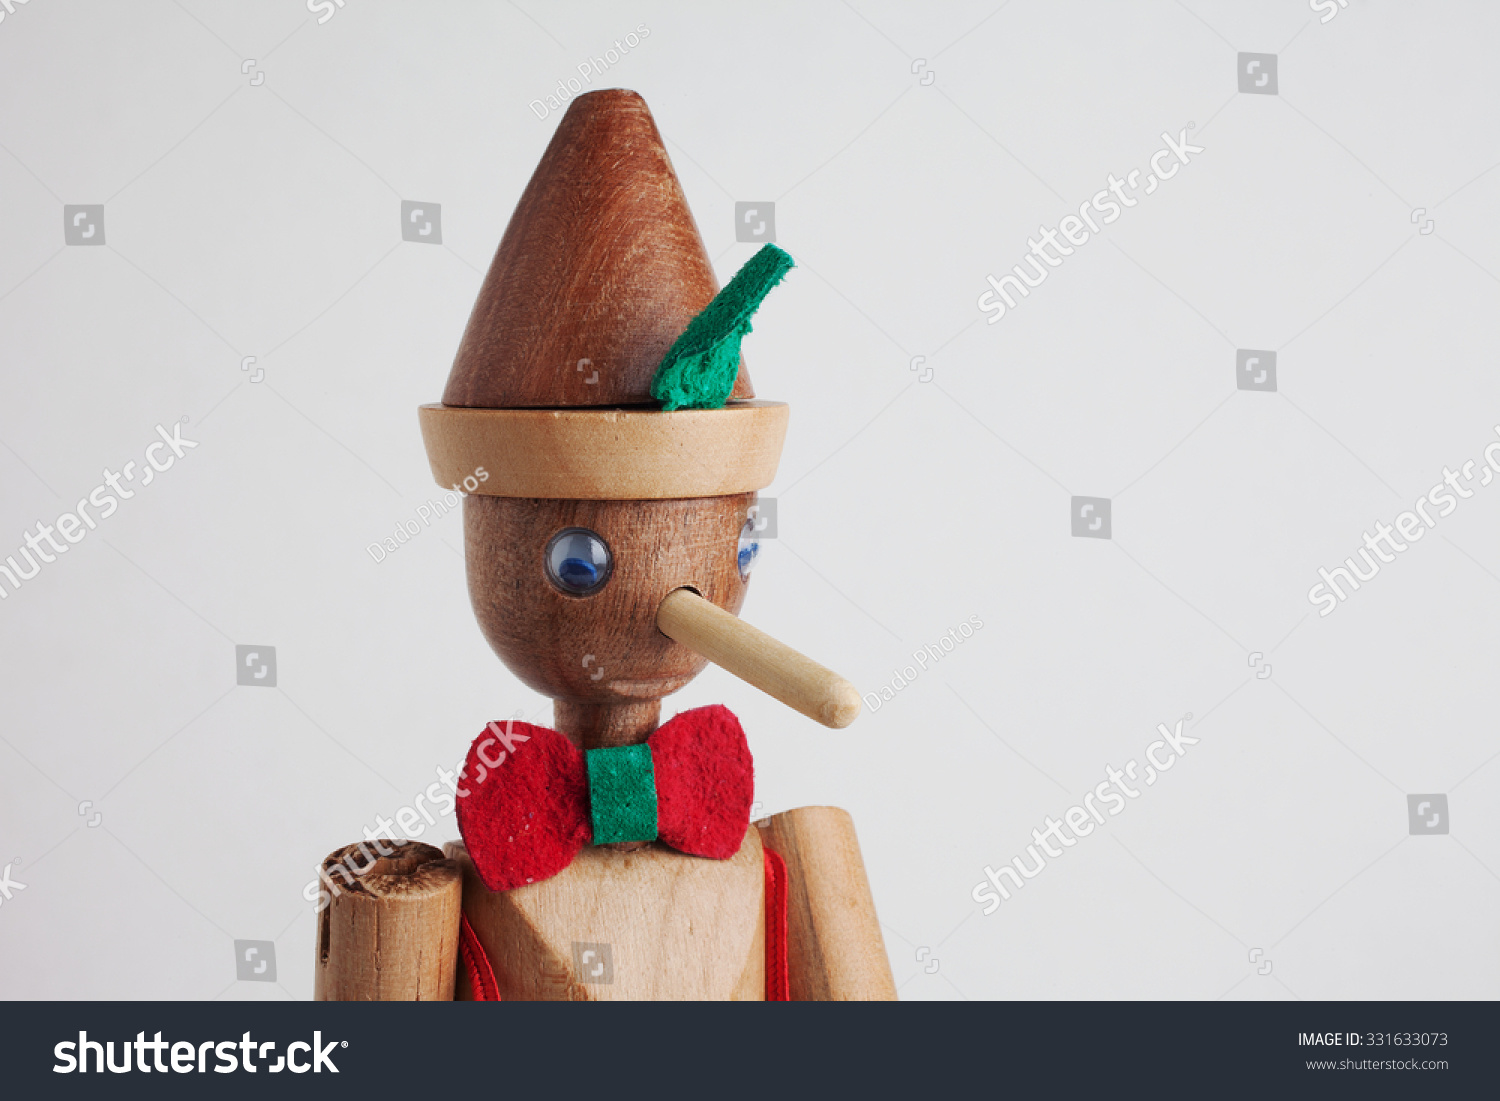 pinocchio wooden doll